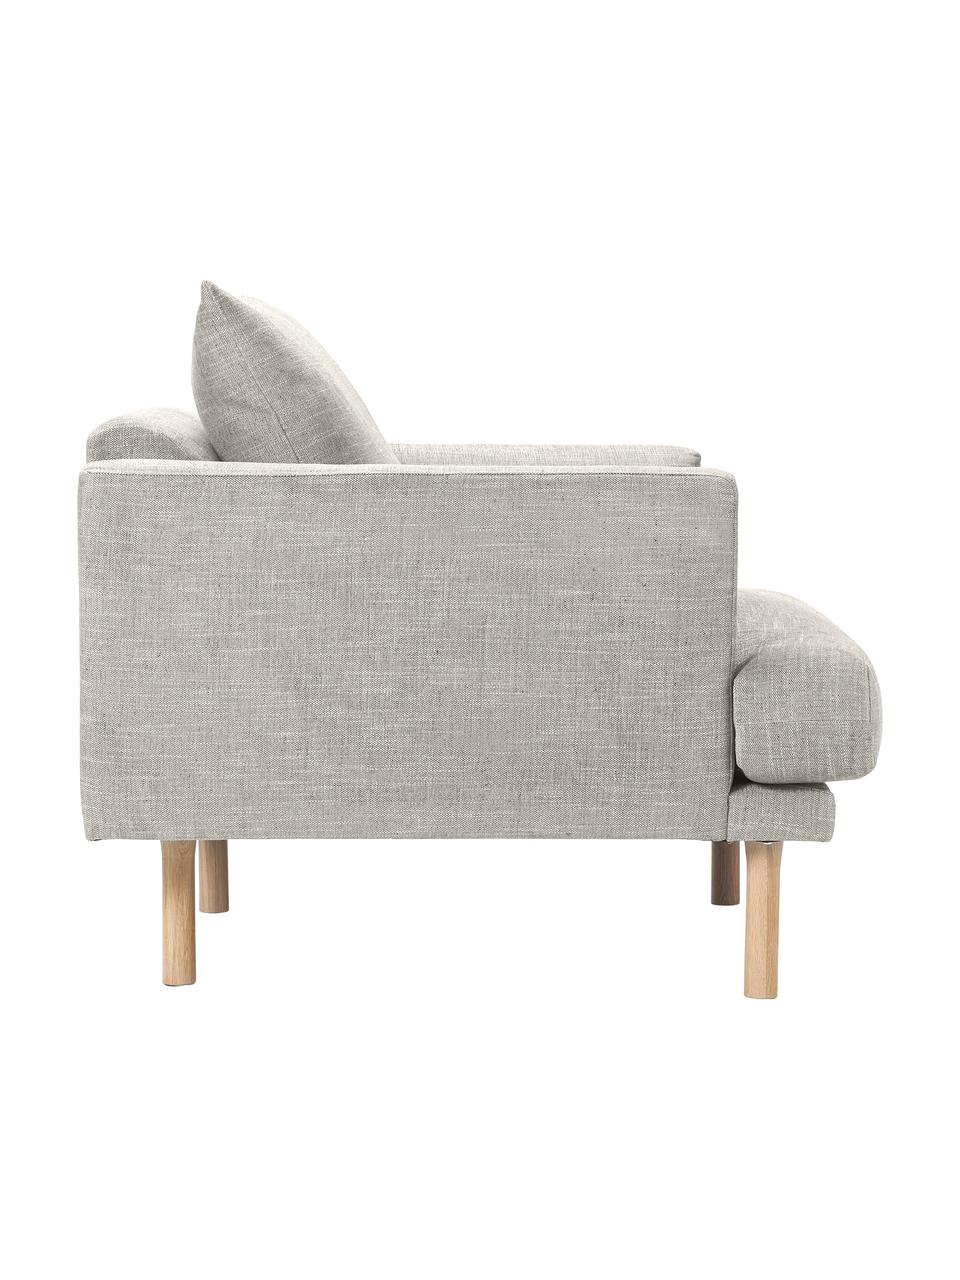 Sofa-Sessel Adrian in Beige, Bezug: 47 % Viskose, 23 % Baumwo, Gestell: Sperrholz, Füße: Eichenholz, geölt, Webstoff Beige, B 90 x H 79 cm